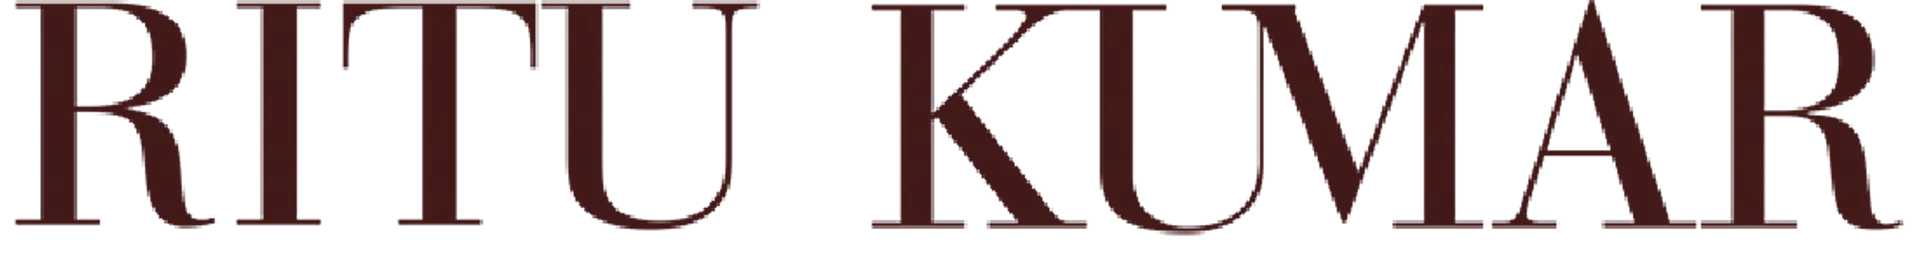 RITU KUMAR logo current weekly ad